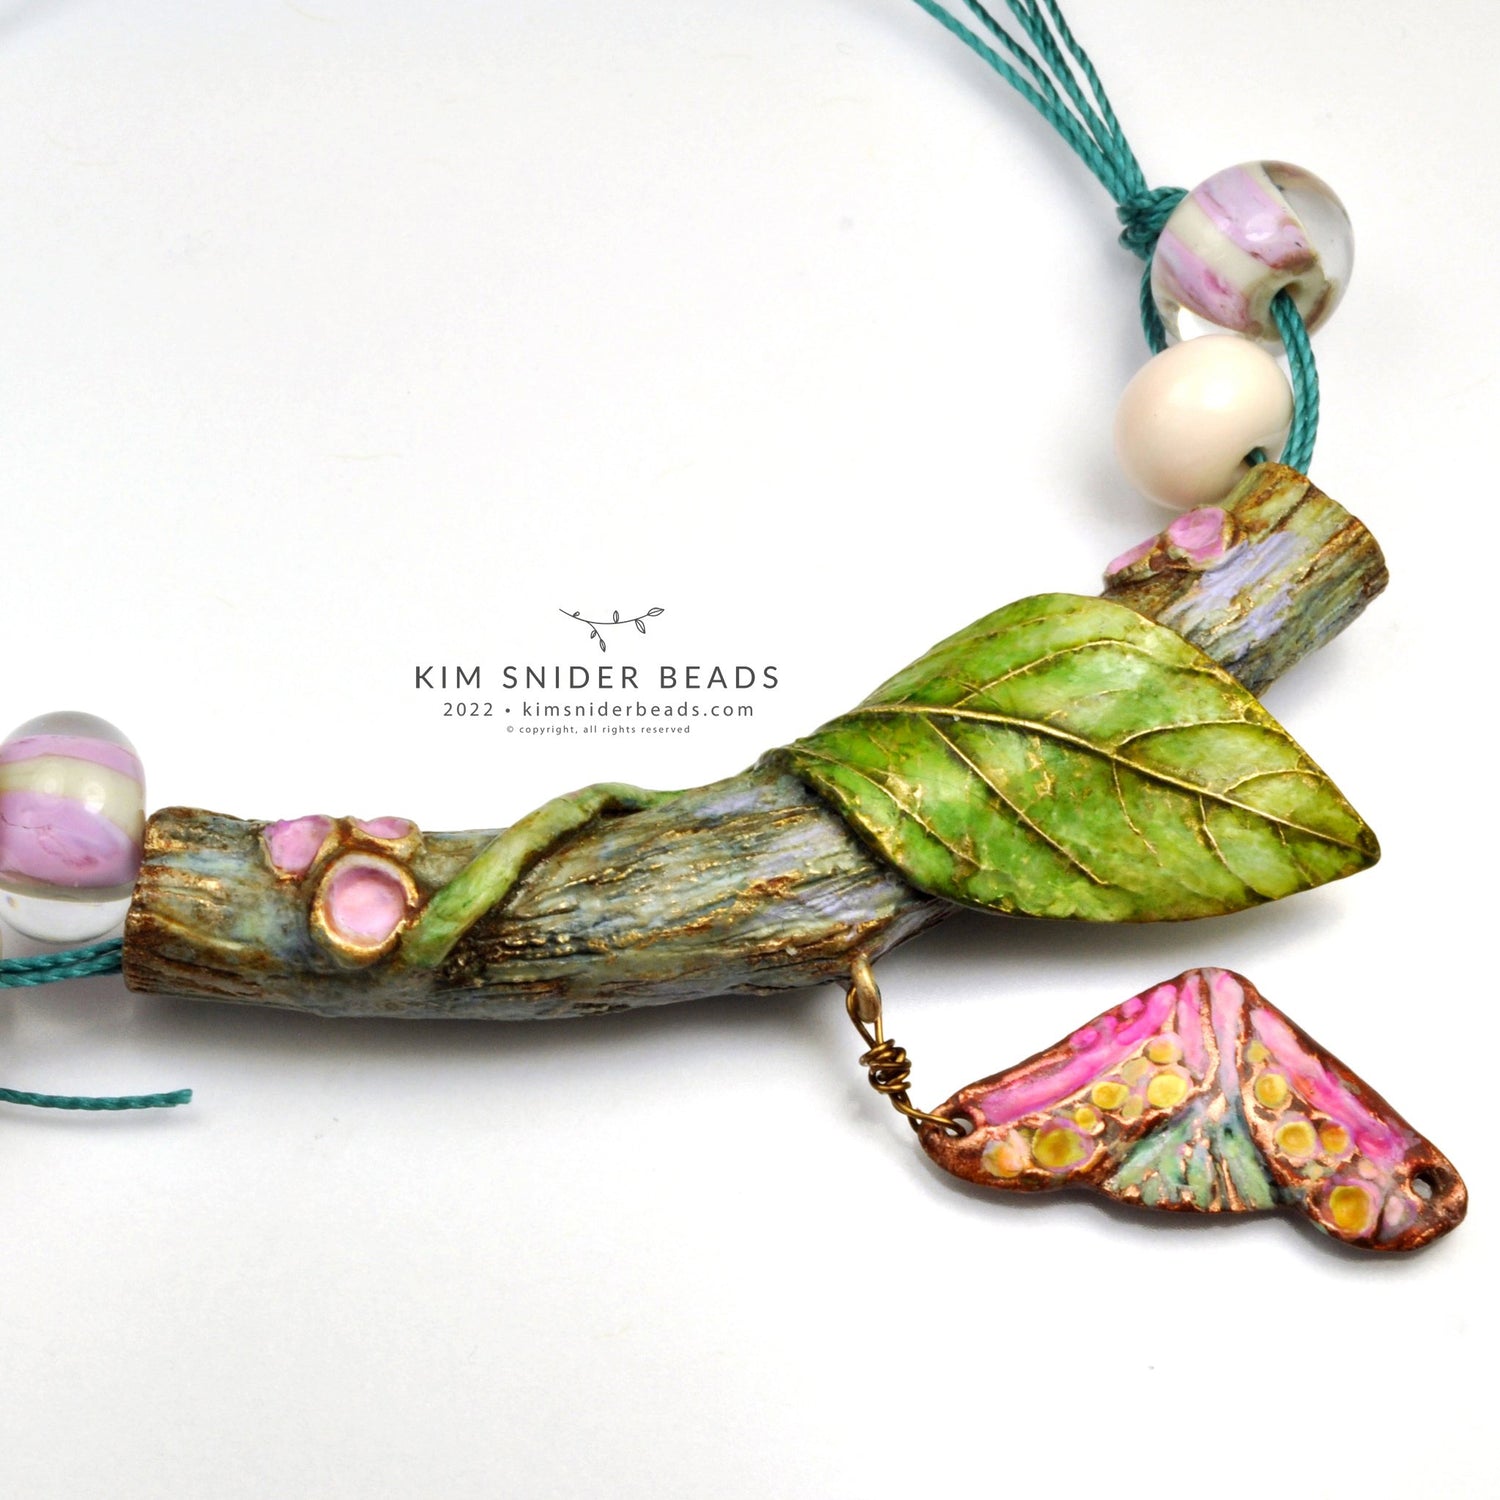 Lichen branch necklace focal bead by Kim Snider